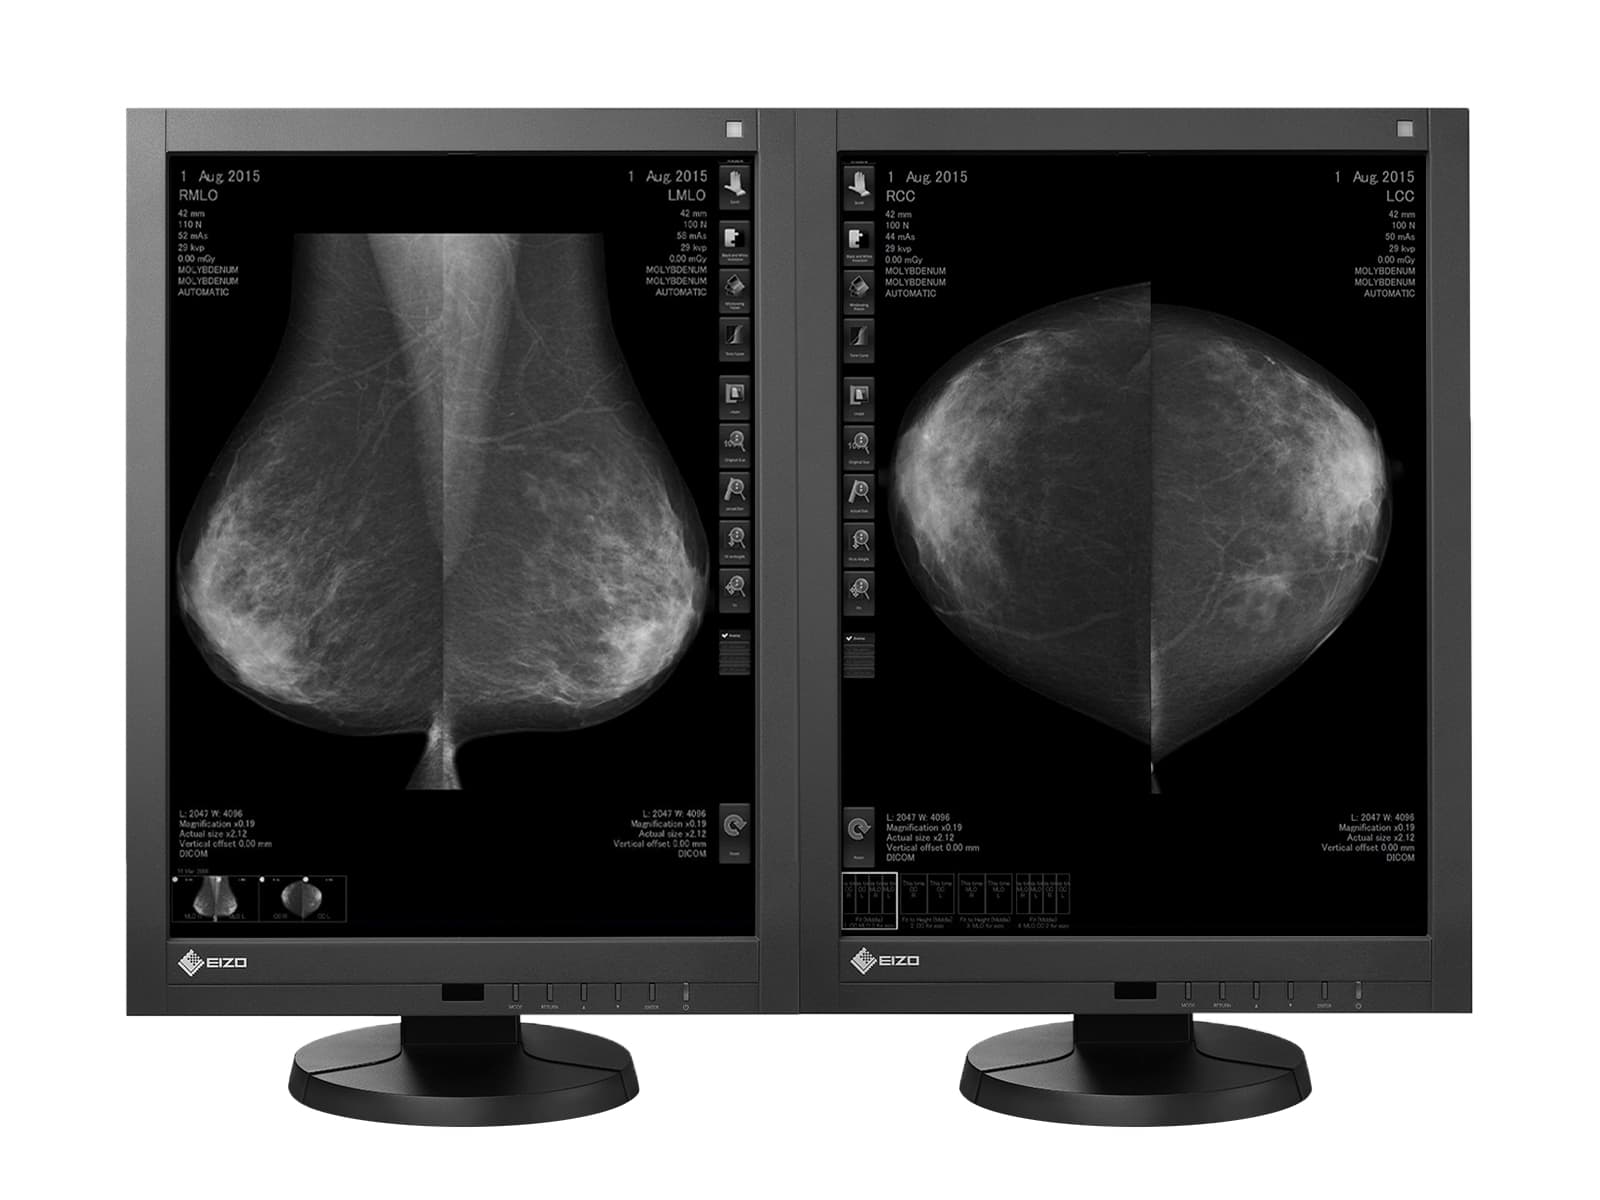 Eizo RadiForce GX540 Pantalla 5D-DBT de mamografía digital LED en escala de grises de 21MP y 3" (GX540-CL)